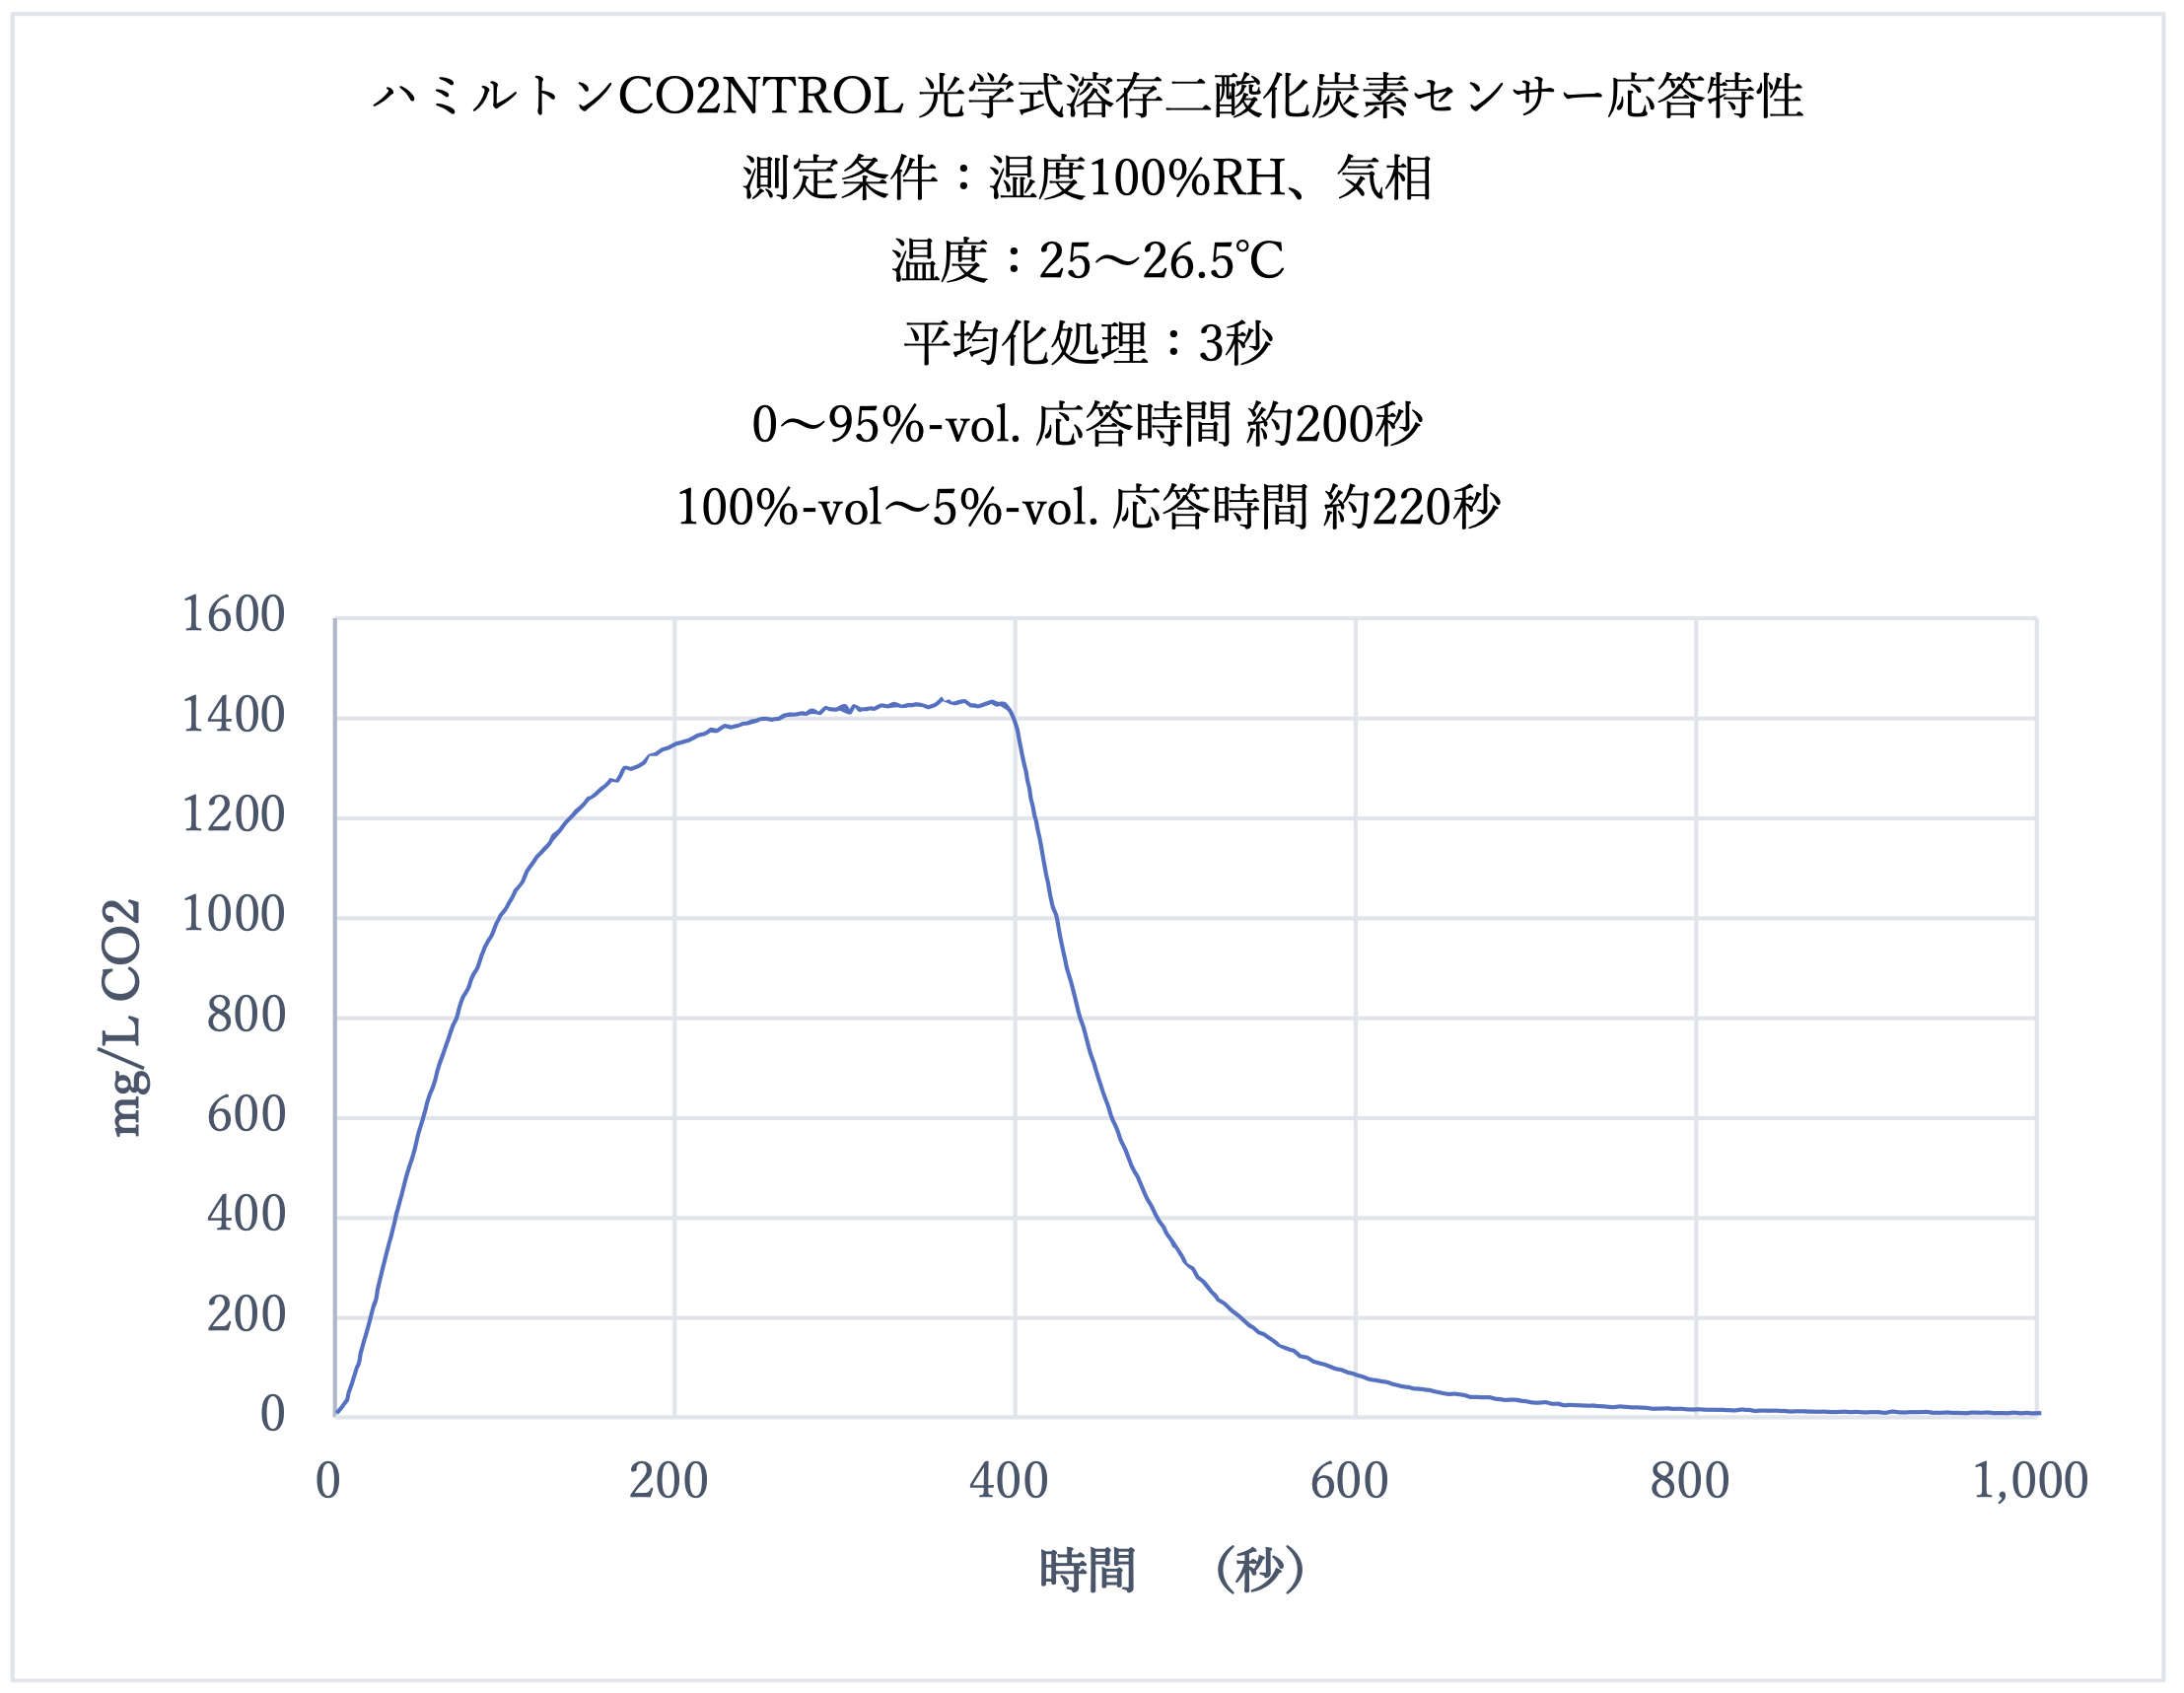 Hamilton DOC2 Sensor CO2NTROL RS485 Response Characteristic Graph